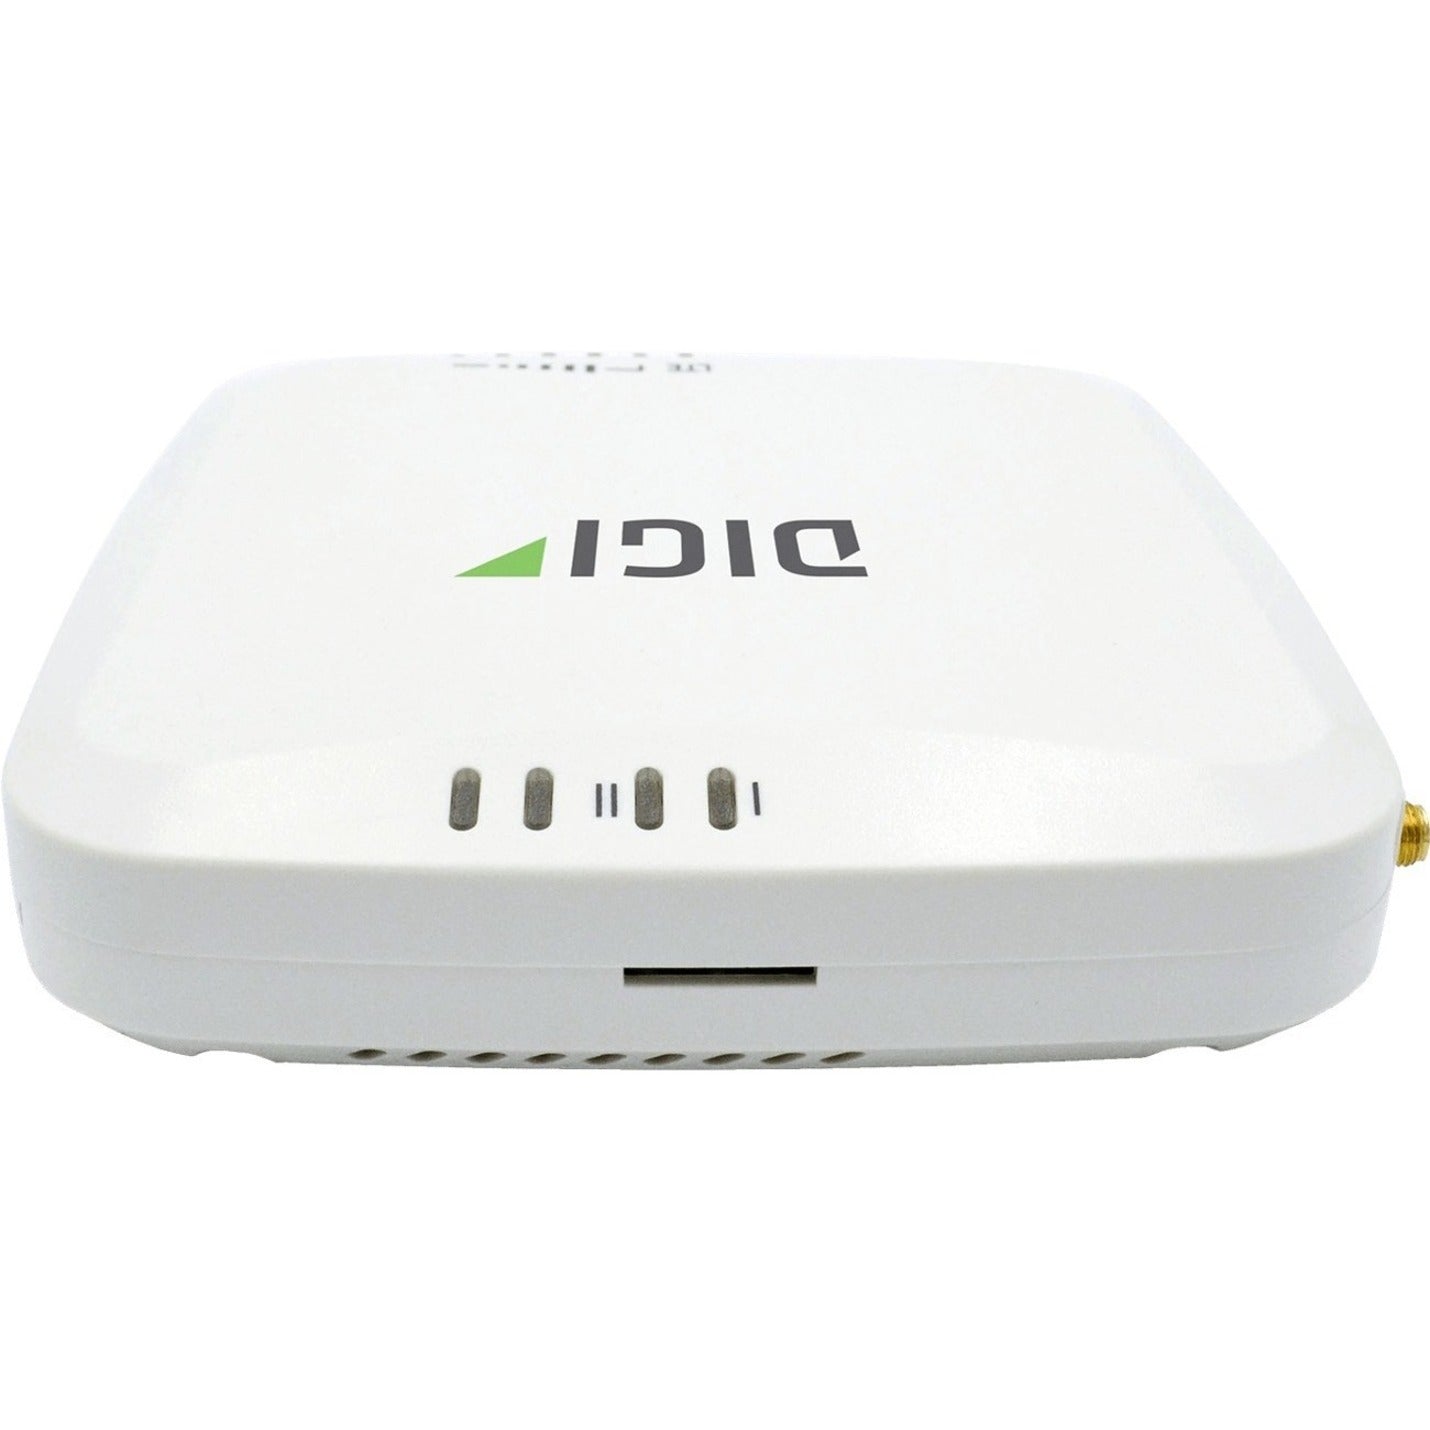 Digi EX15 2 SIM Cellular Ethernet Modem/Wireless Router